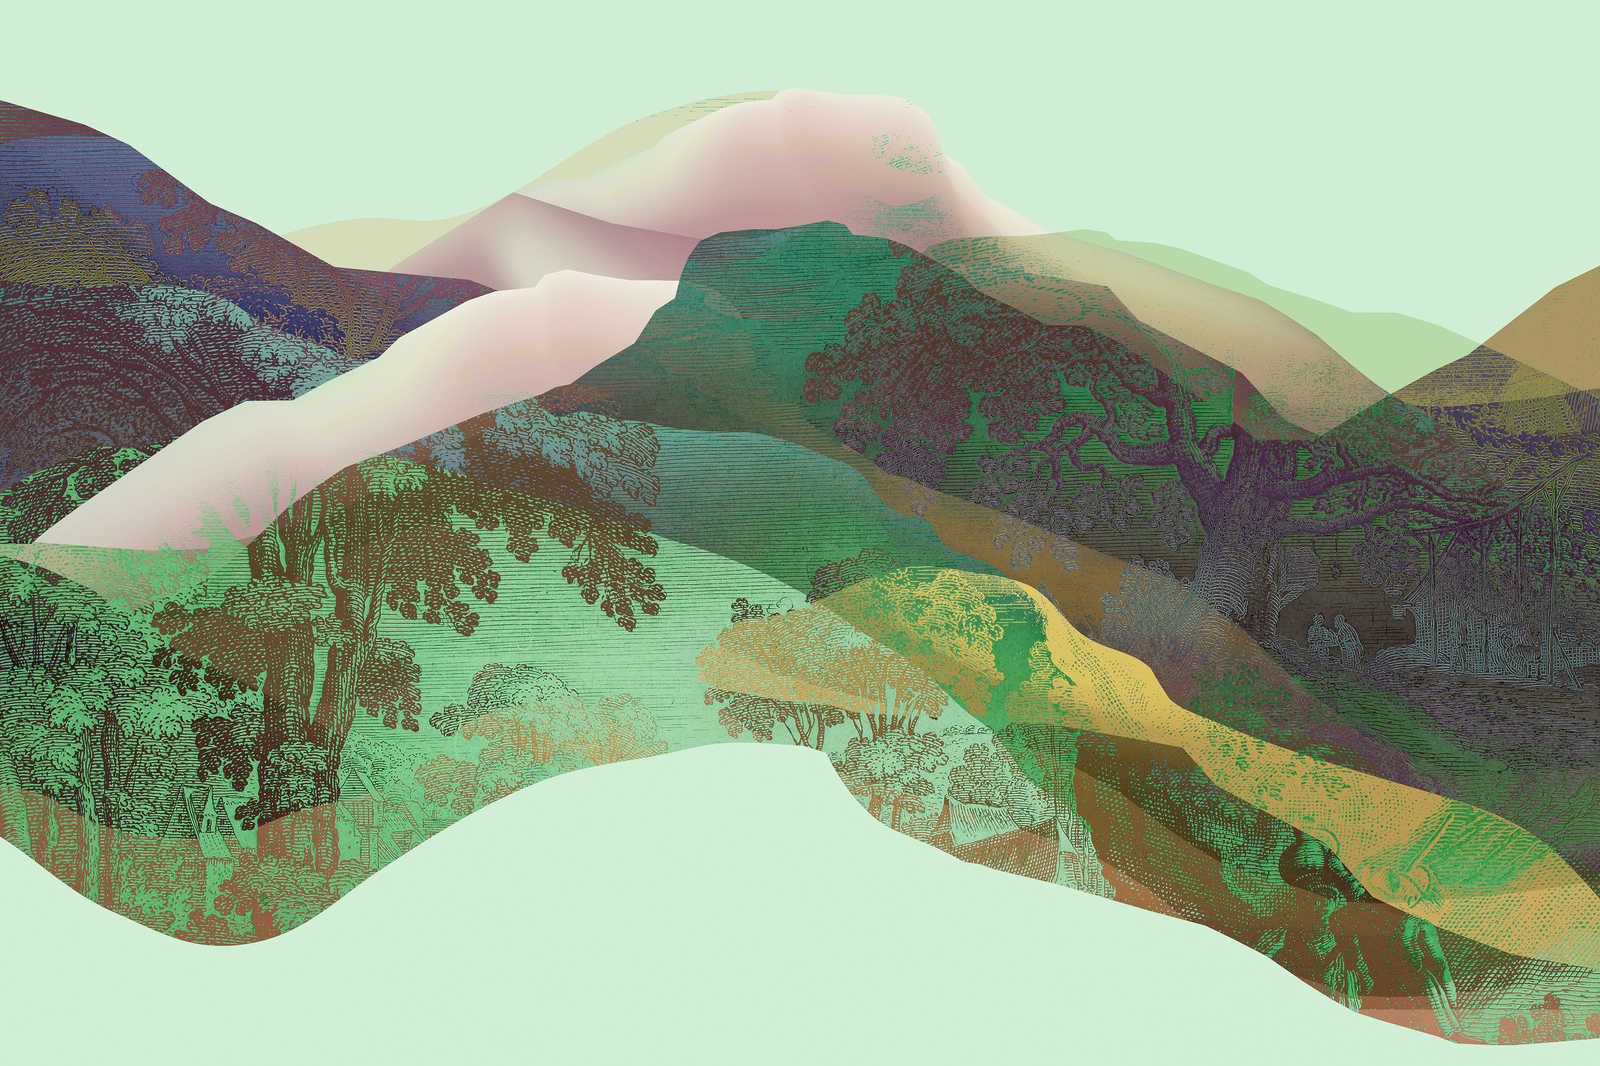             Magic Mountain 3 - Canvas painting green mountains modern design - 1,20 m x 0,80 m
        